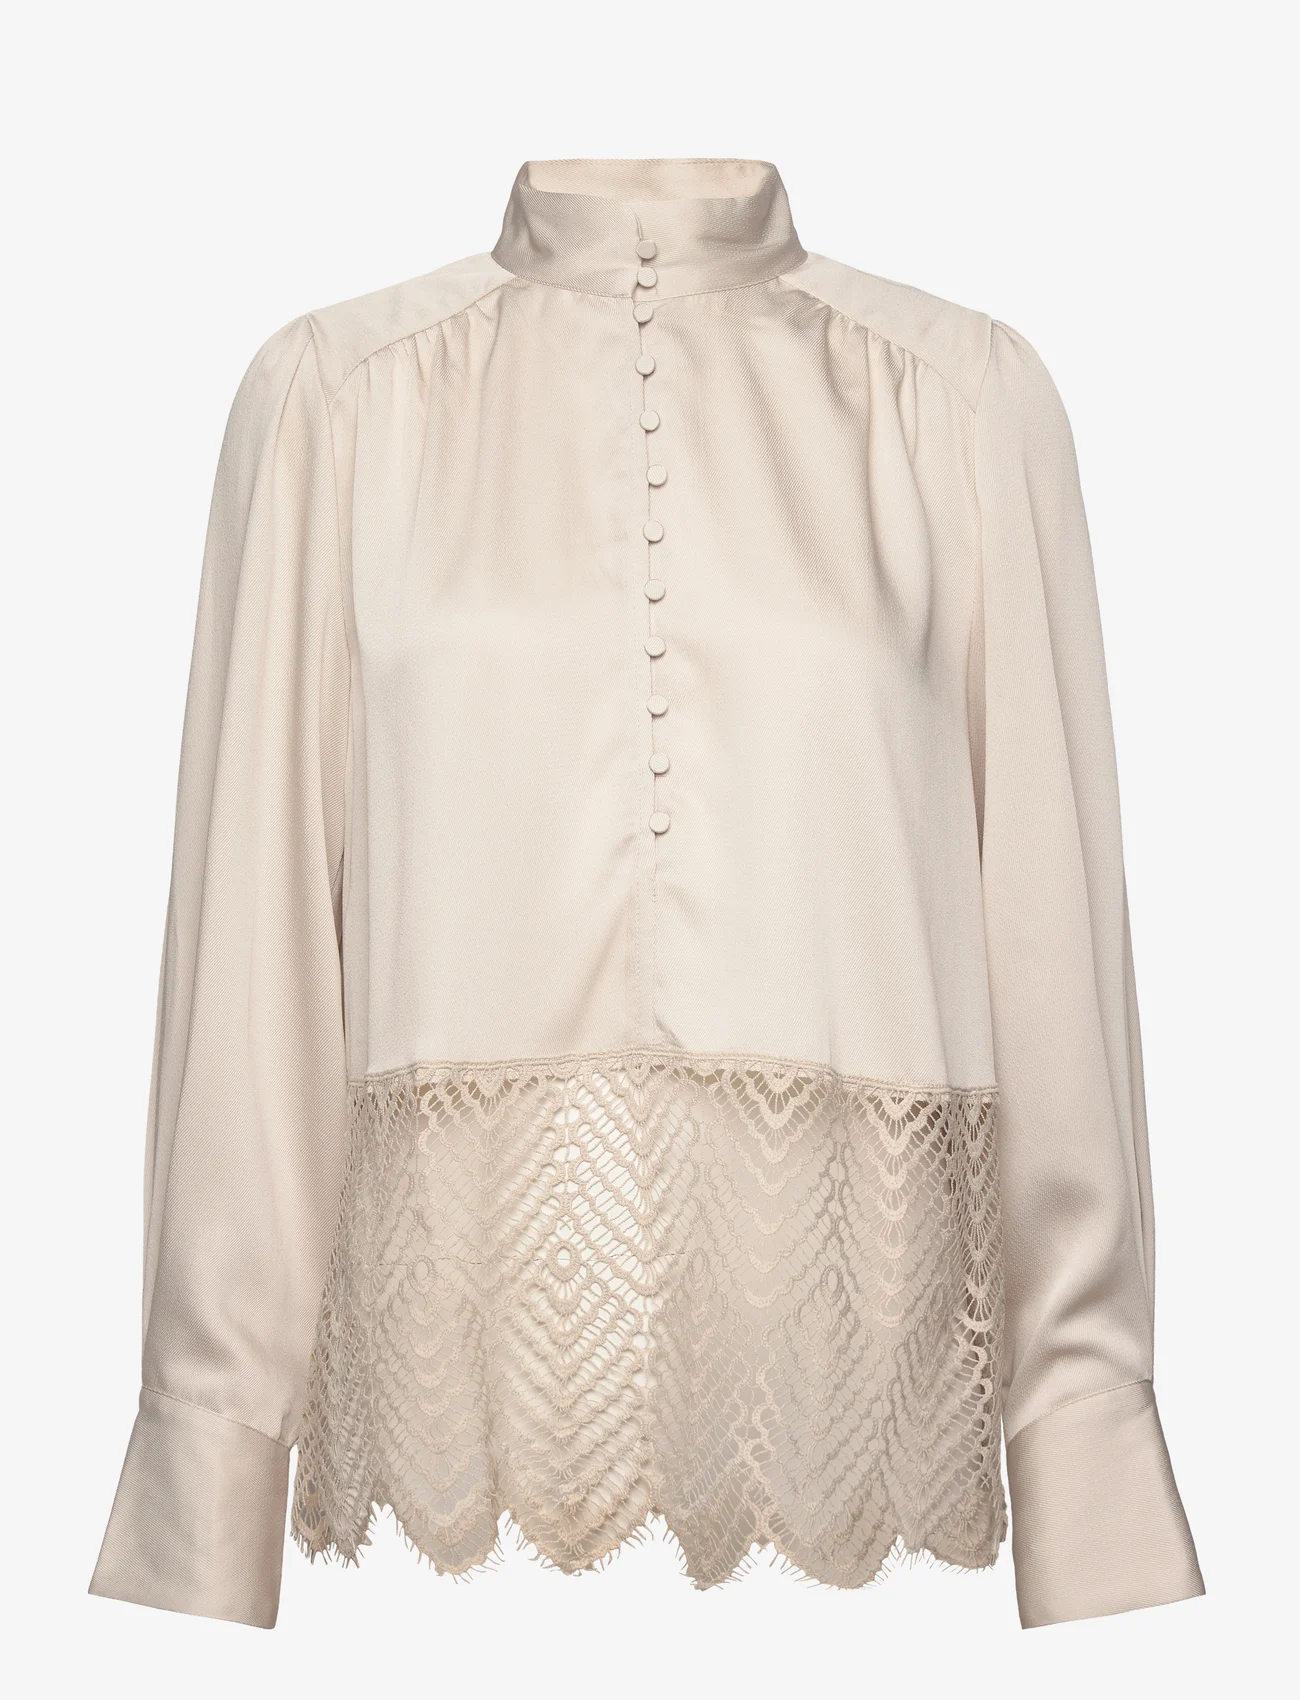 Bruuns Bazaar - CedarsBBChatrina blouse - blouses met lange mouwen - kit - 0